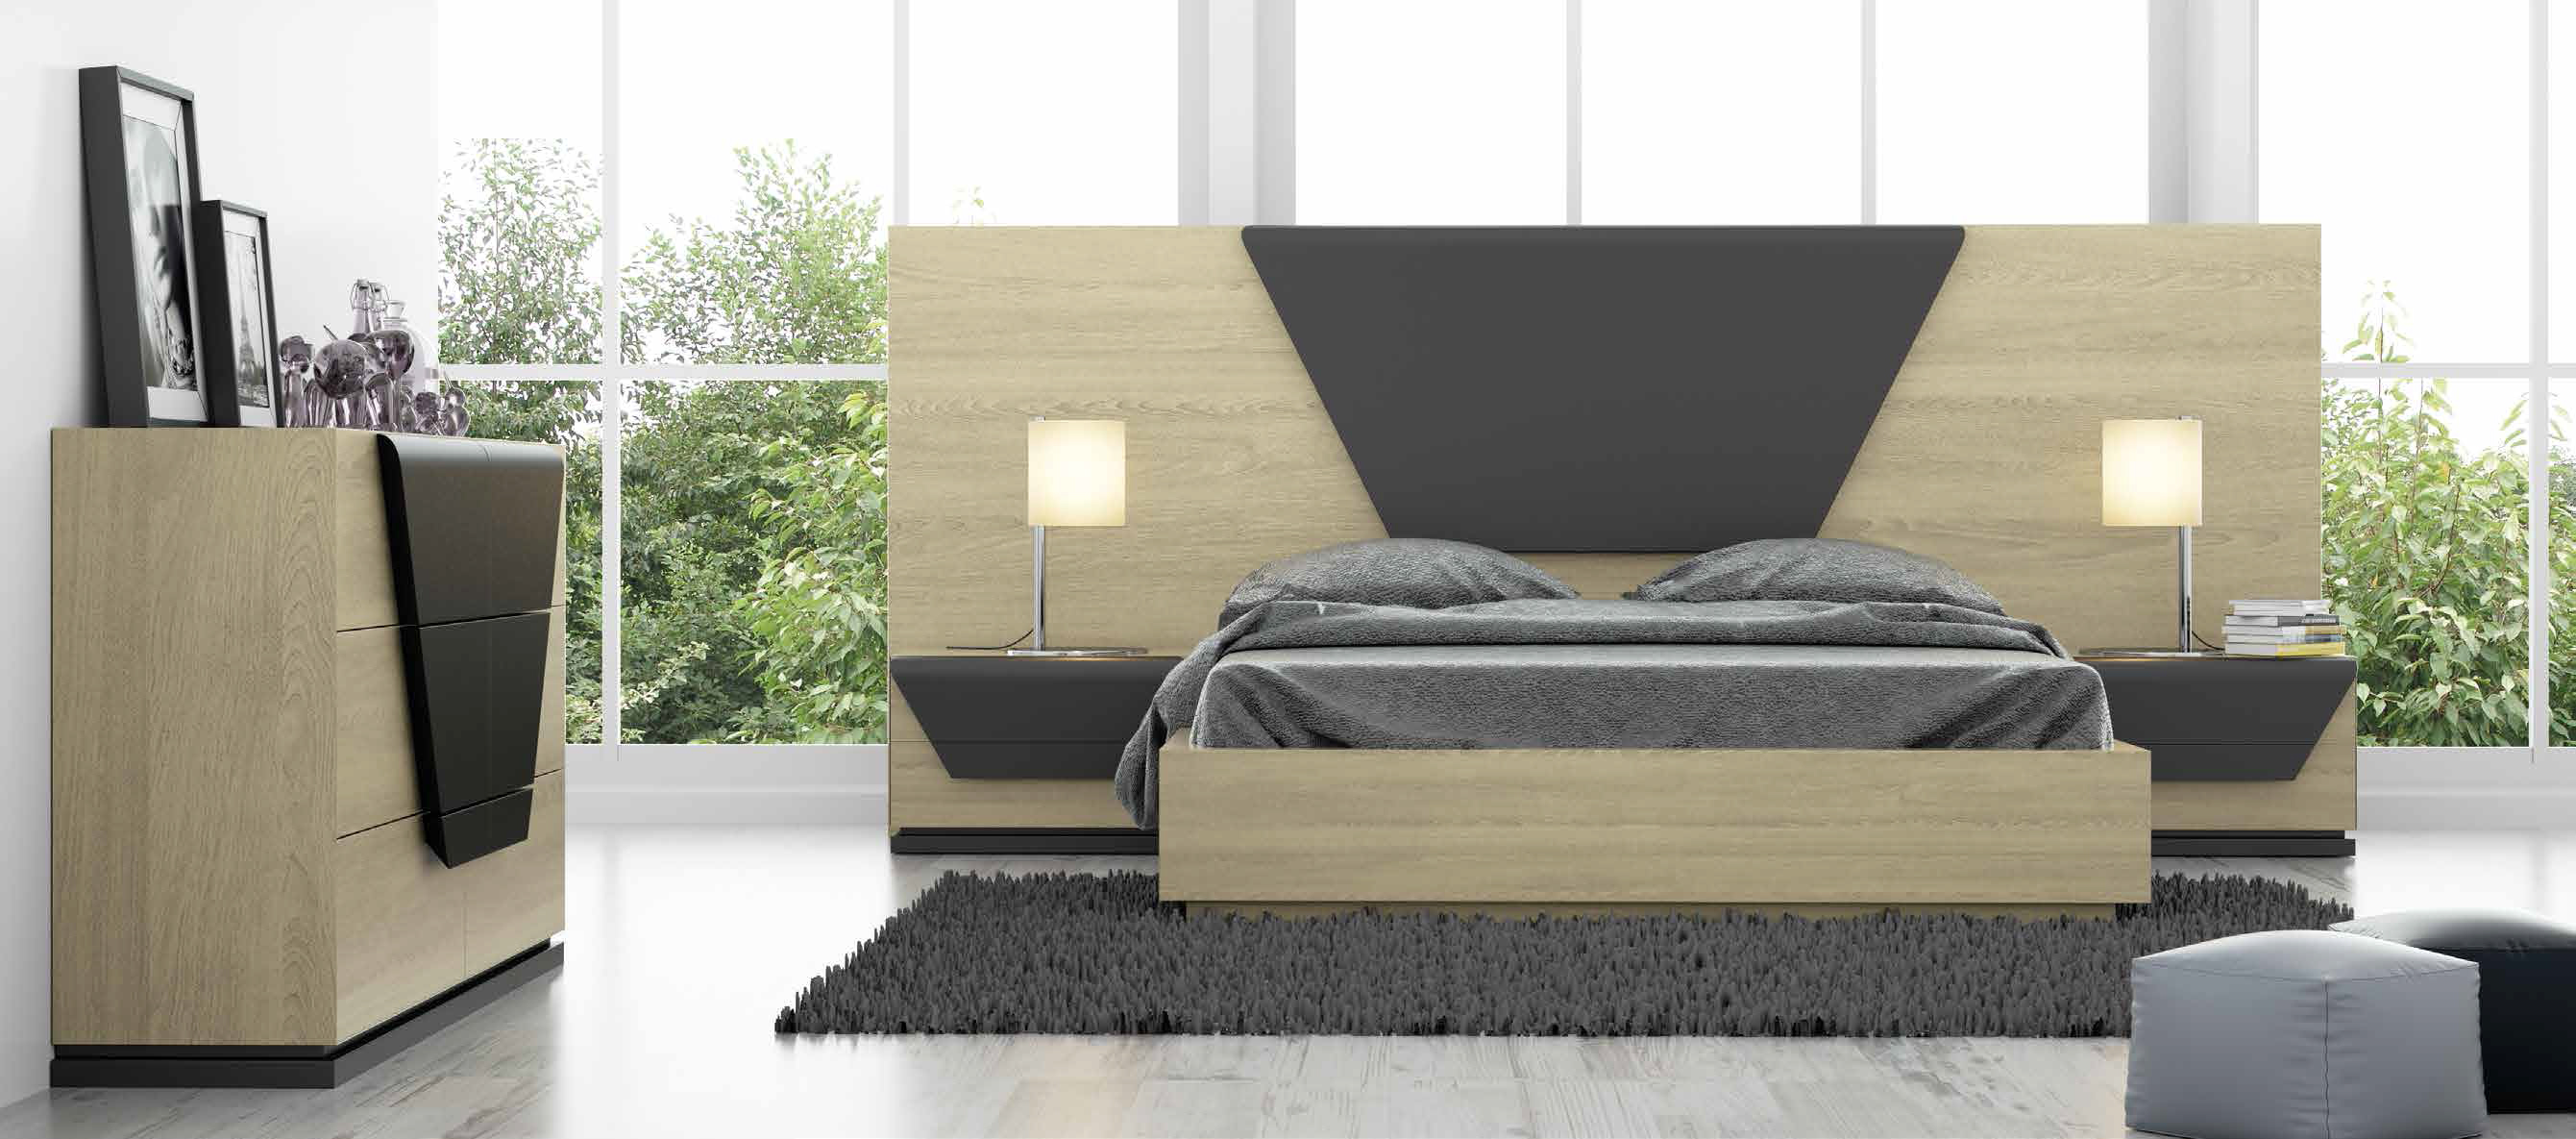 Brands Franco Furniture Bedrooms vol2, Spain DOR 85